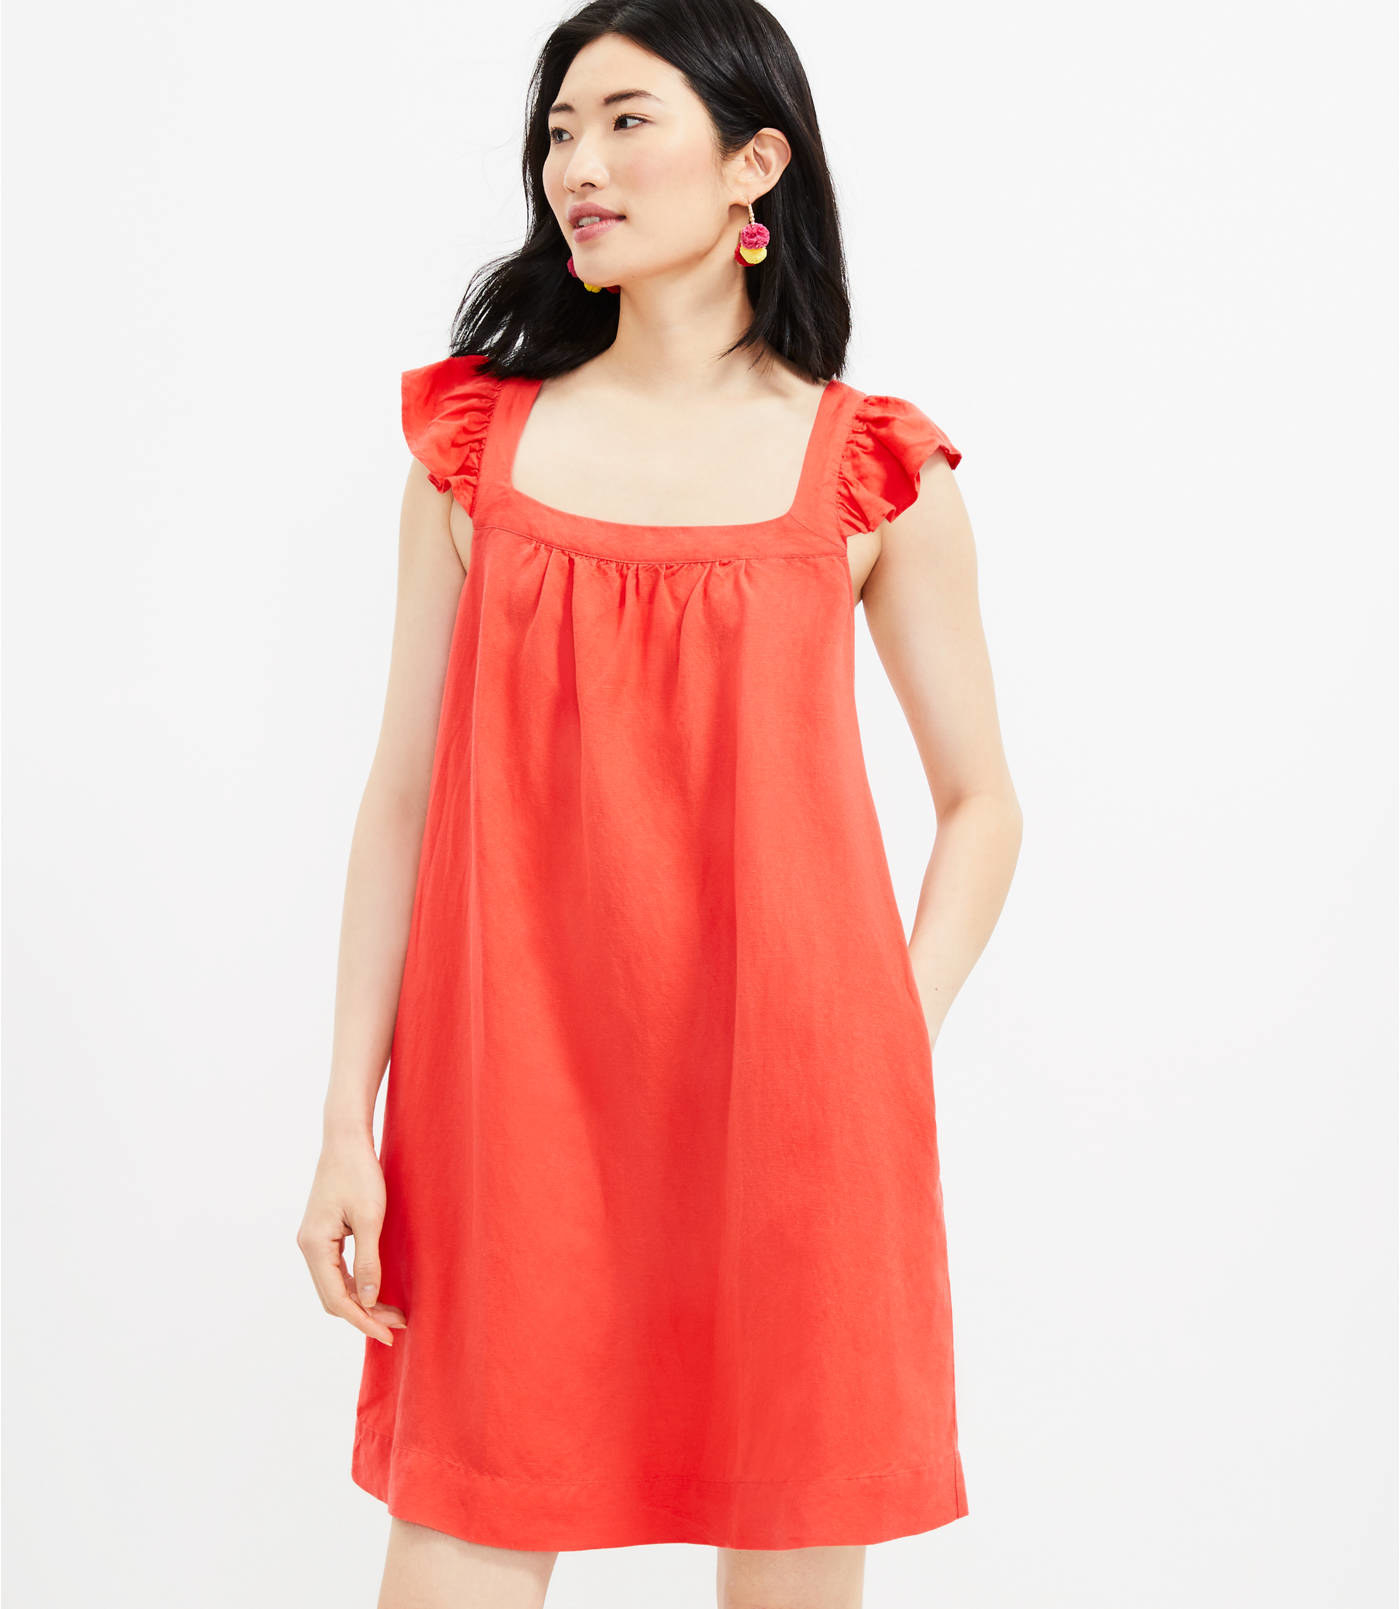 A model wears the sleeveless dress in red